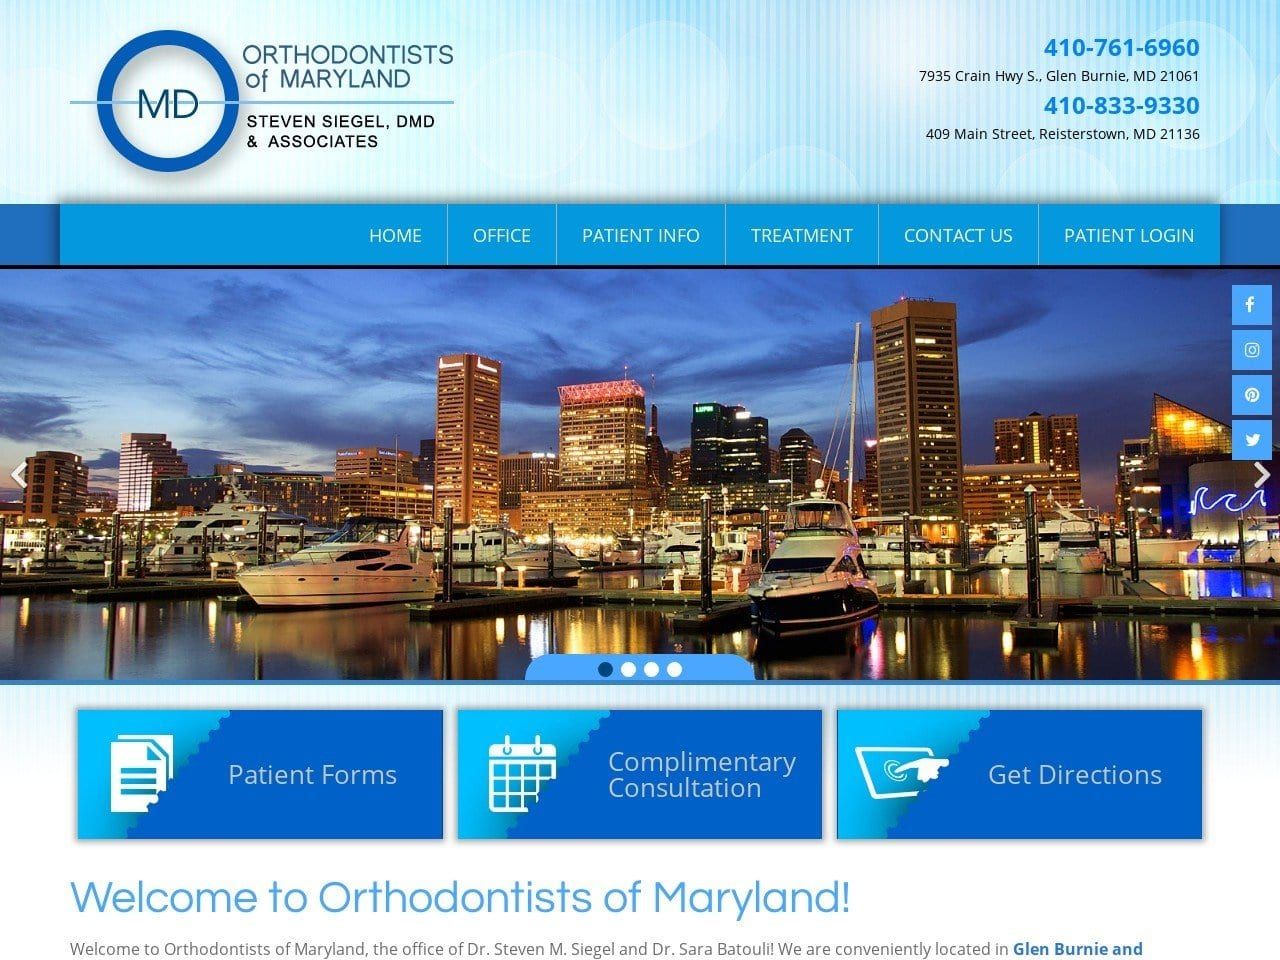 Orthodontists of Maryland Website Screenshot from orthodontistsofmaryland.com